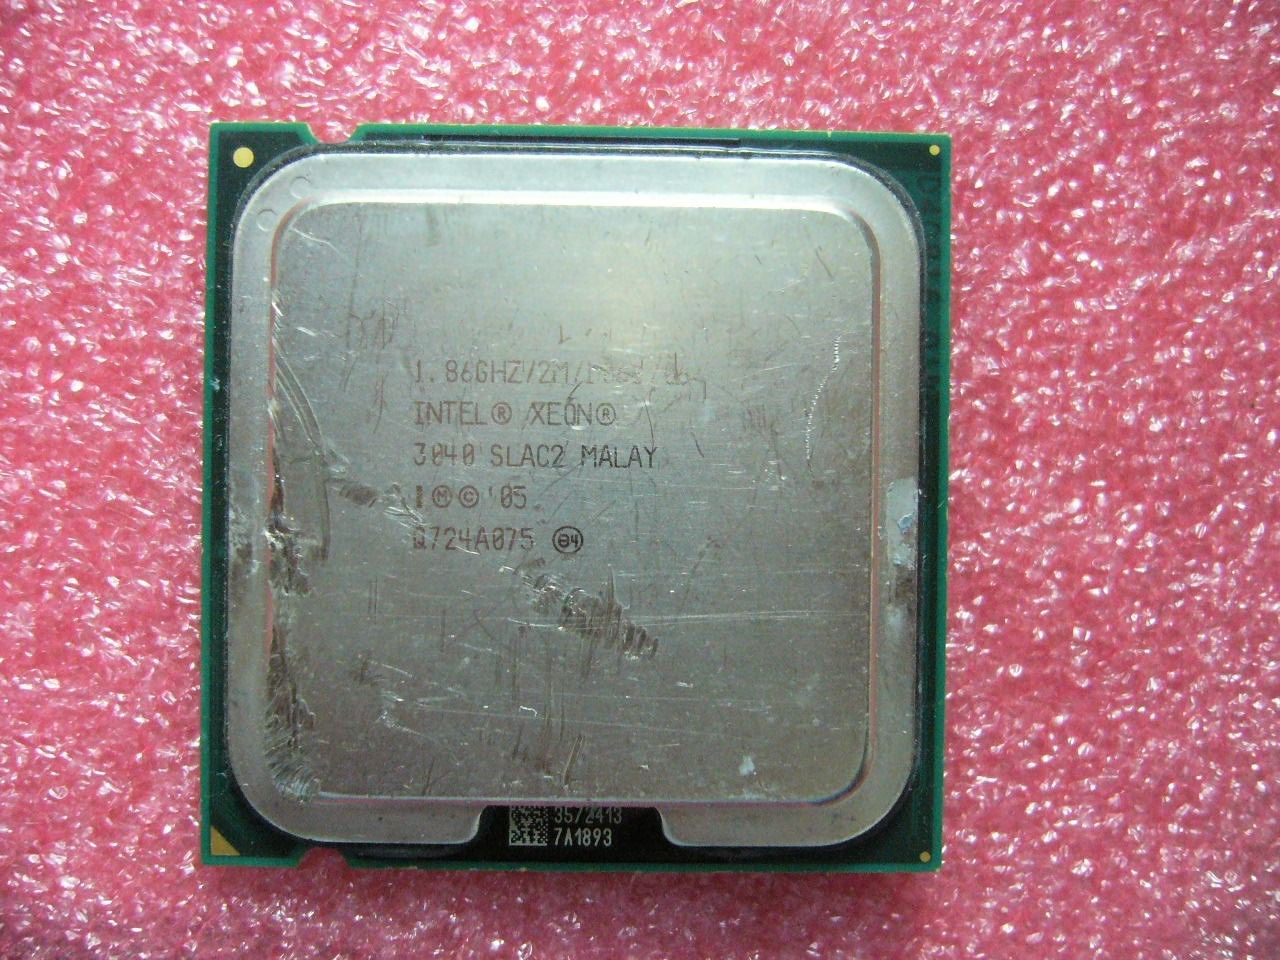 QTY 1x INTEL Xeon Dual Cores 3040 CPU 1.86GHz 2MB/1066Mhz LGA775 SLAC2 - Click Image to Close